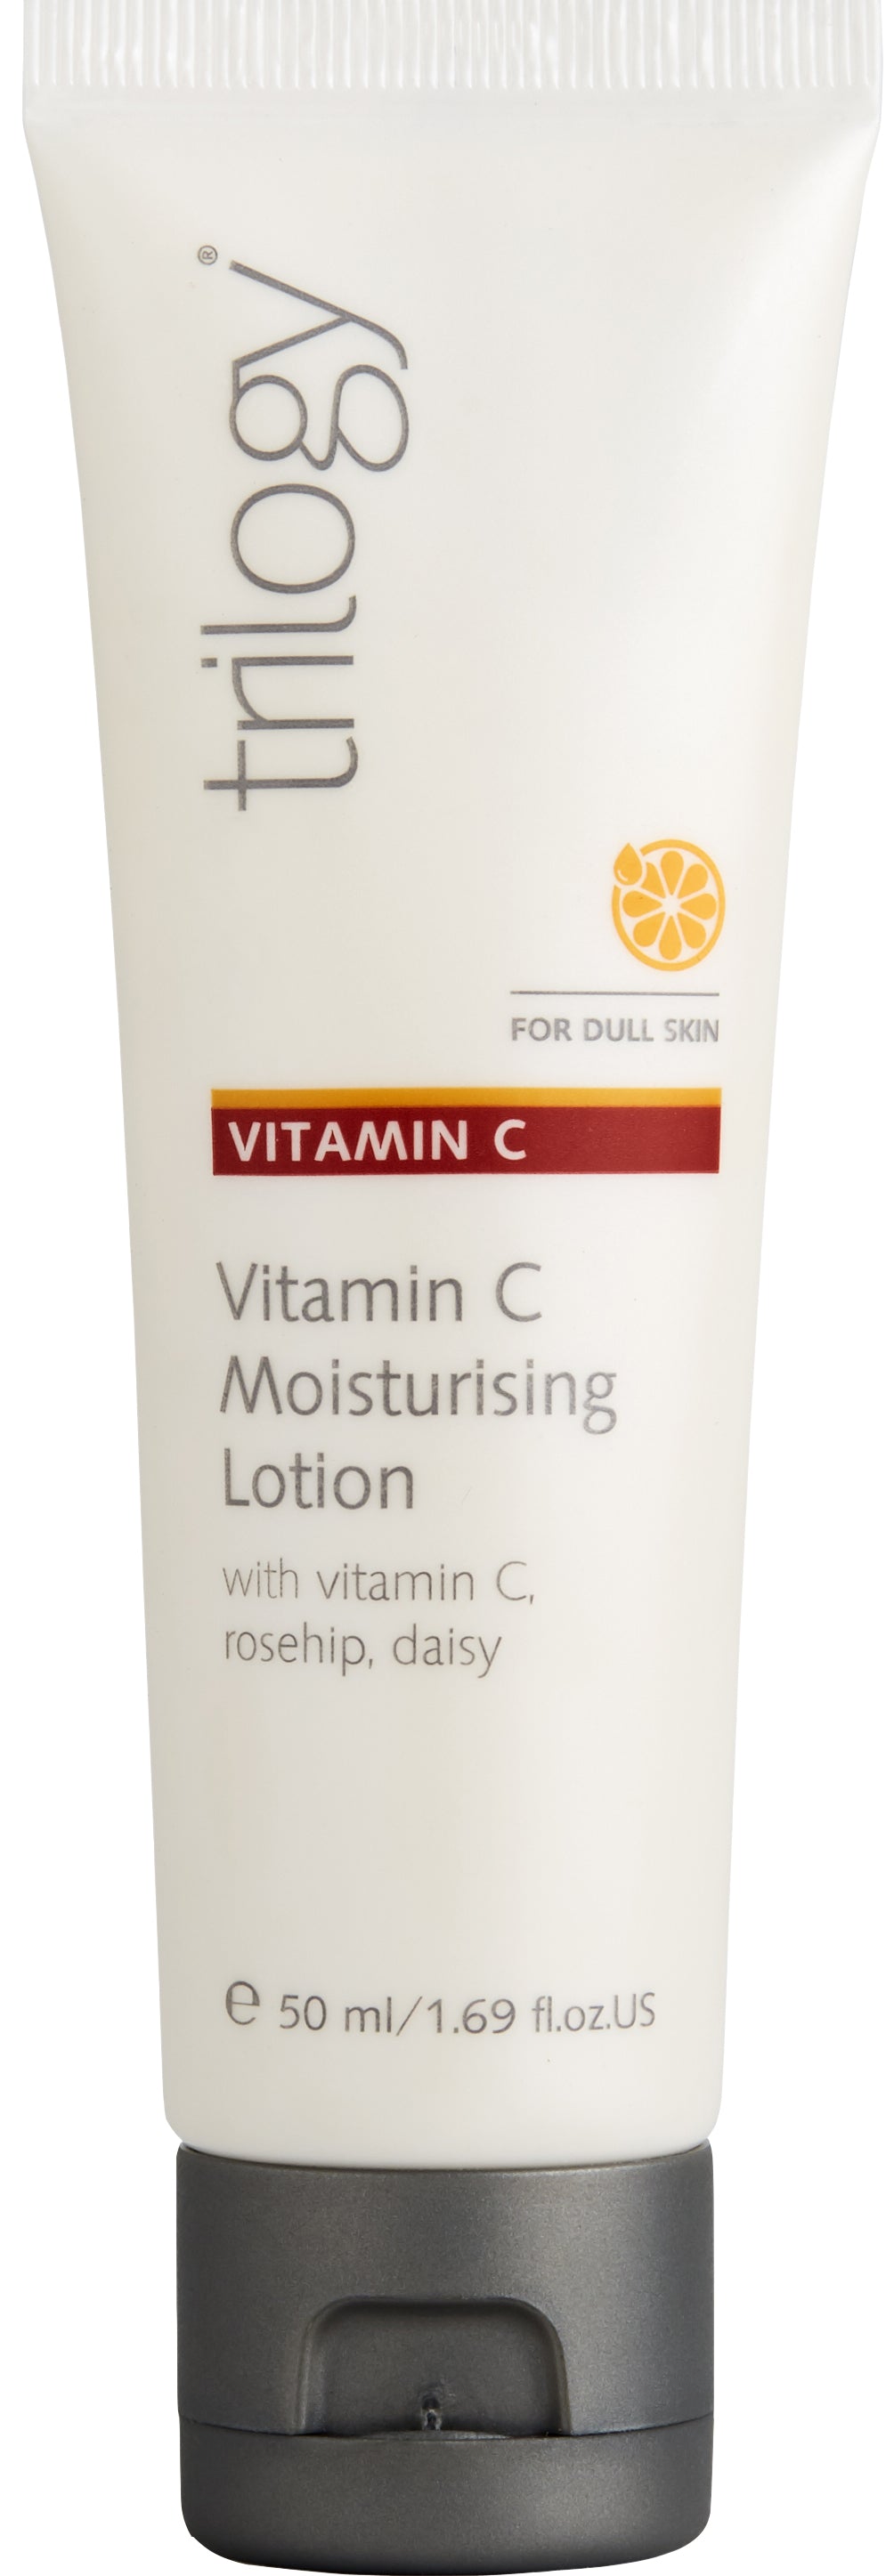 Trilogy vitamin c moisturising lotion, Leahys pharmacy